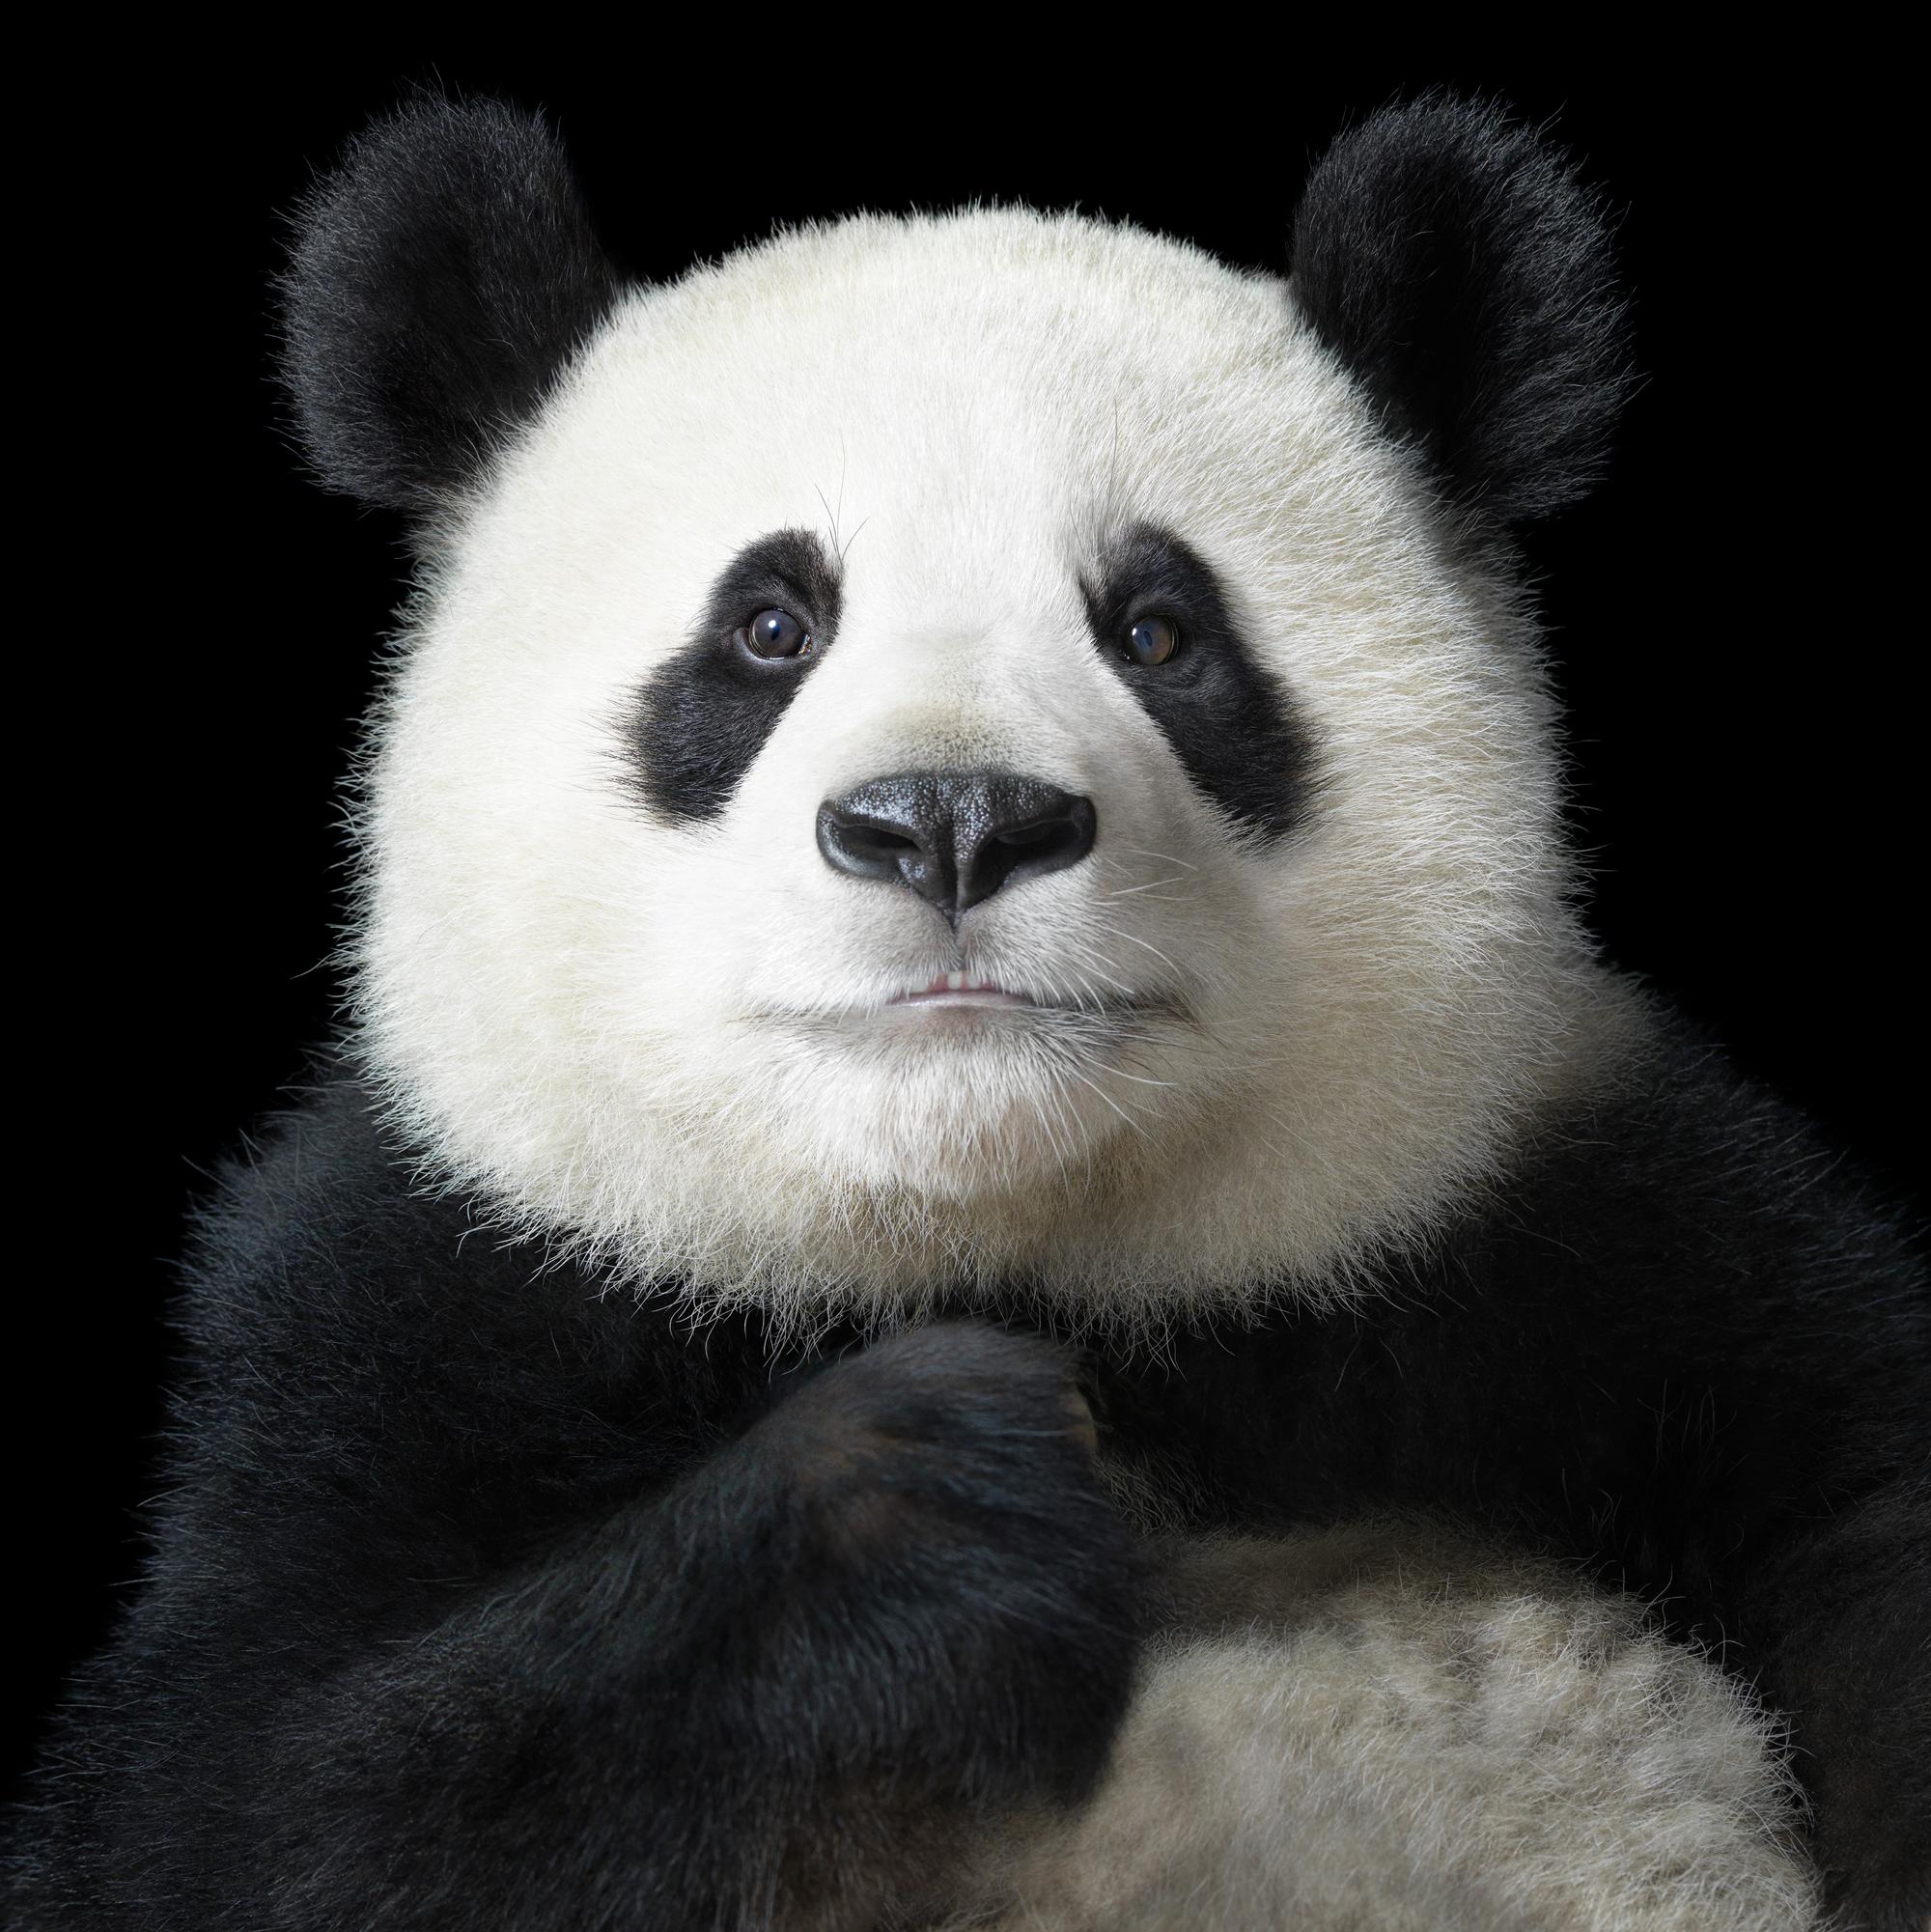 Tim Flach Color Photograph - Ya Yun 'Elegant' - Contemporary British Art, Animal Photography, Pandas, Chinese